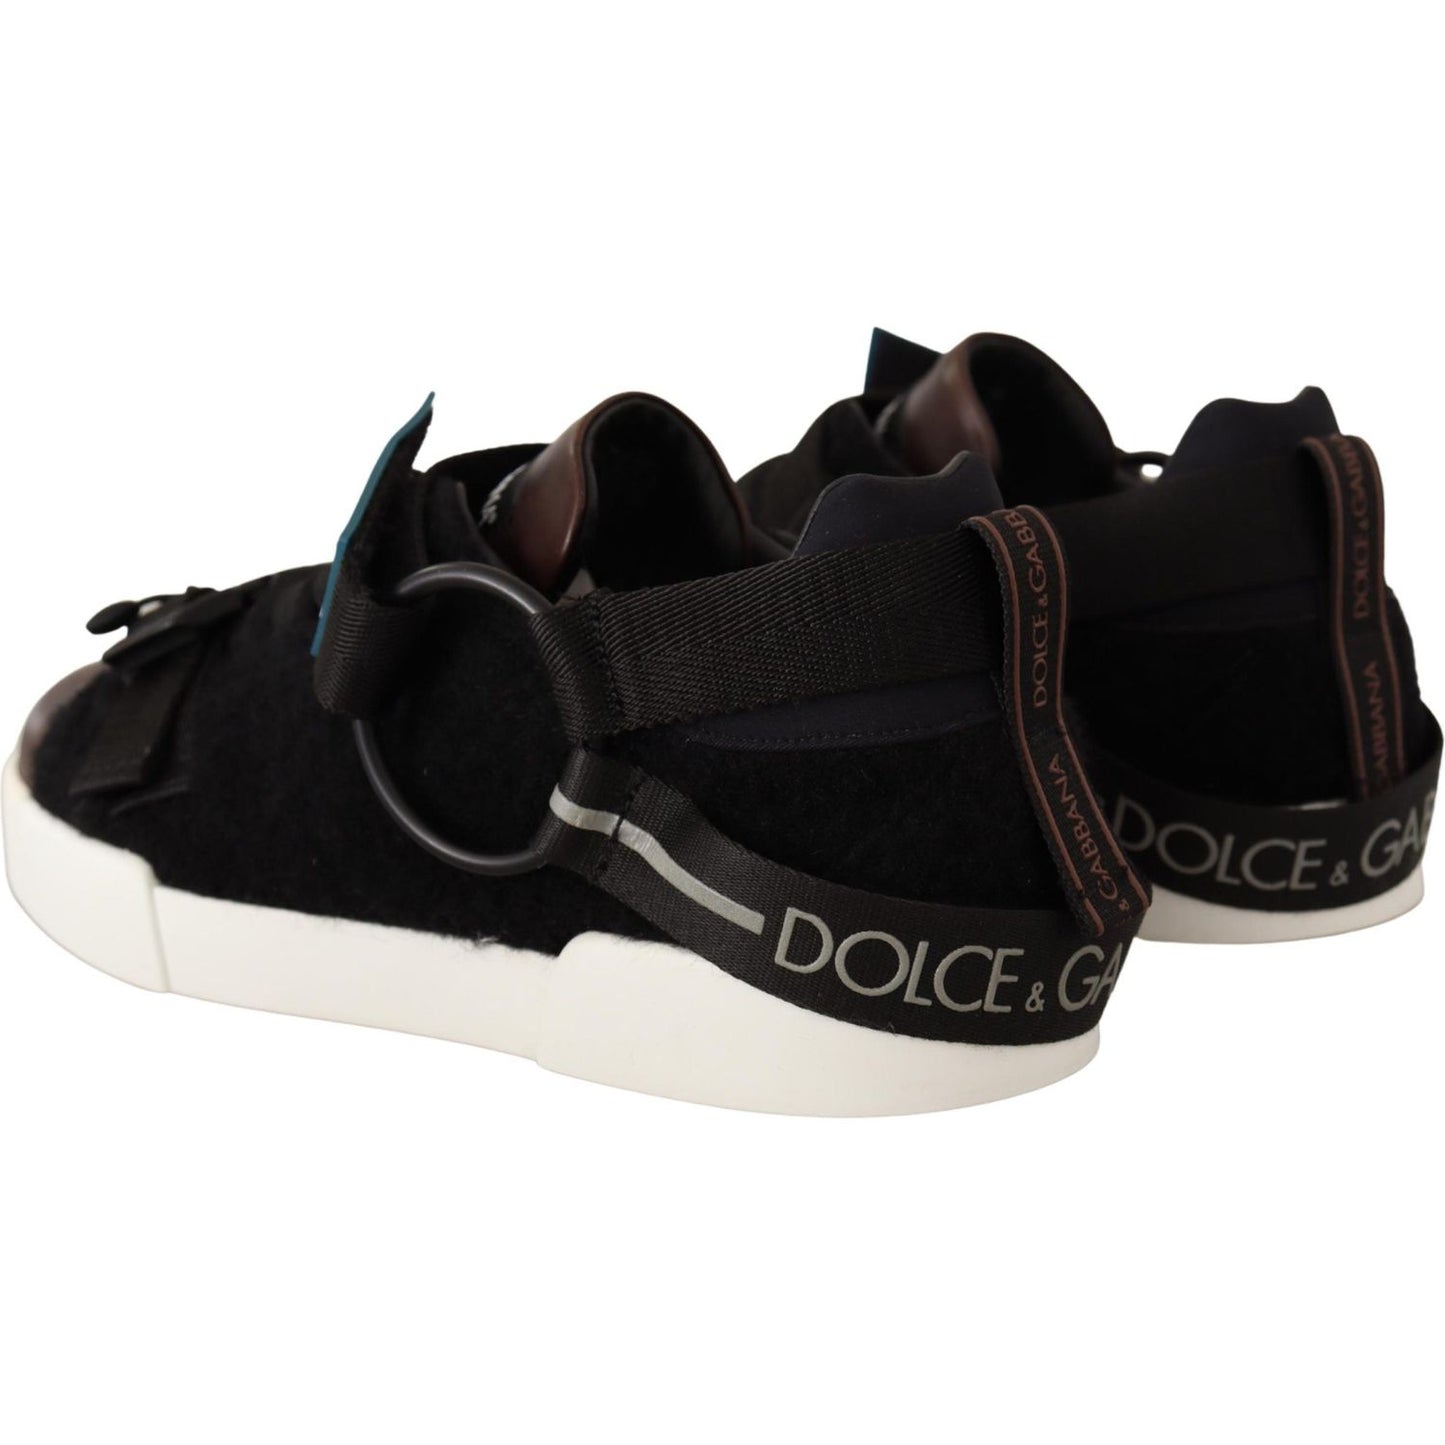 Dolce & Gabbana Shearling-Trimmed Leather Sneakers brown-leather-black-shearling-sneakers IMG_9277-scaled-e3f4320d-ea3.jpg